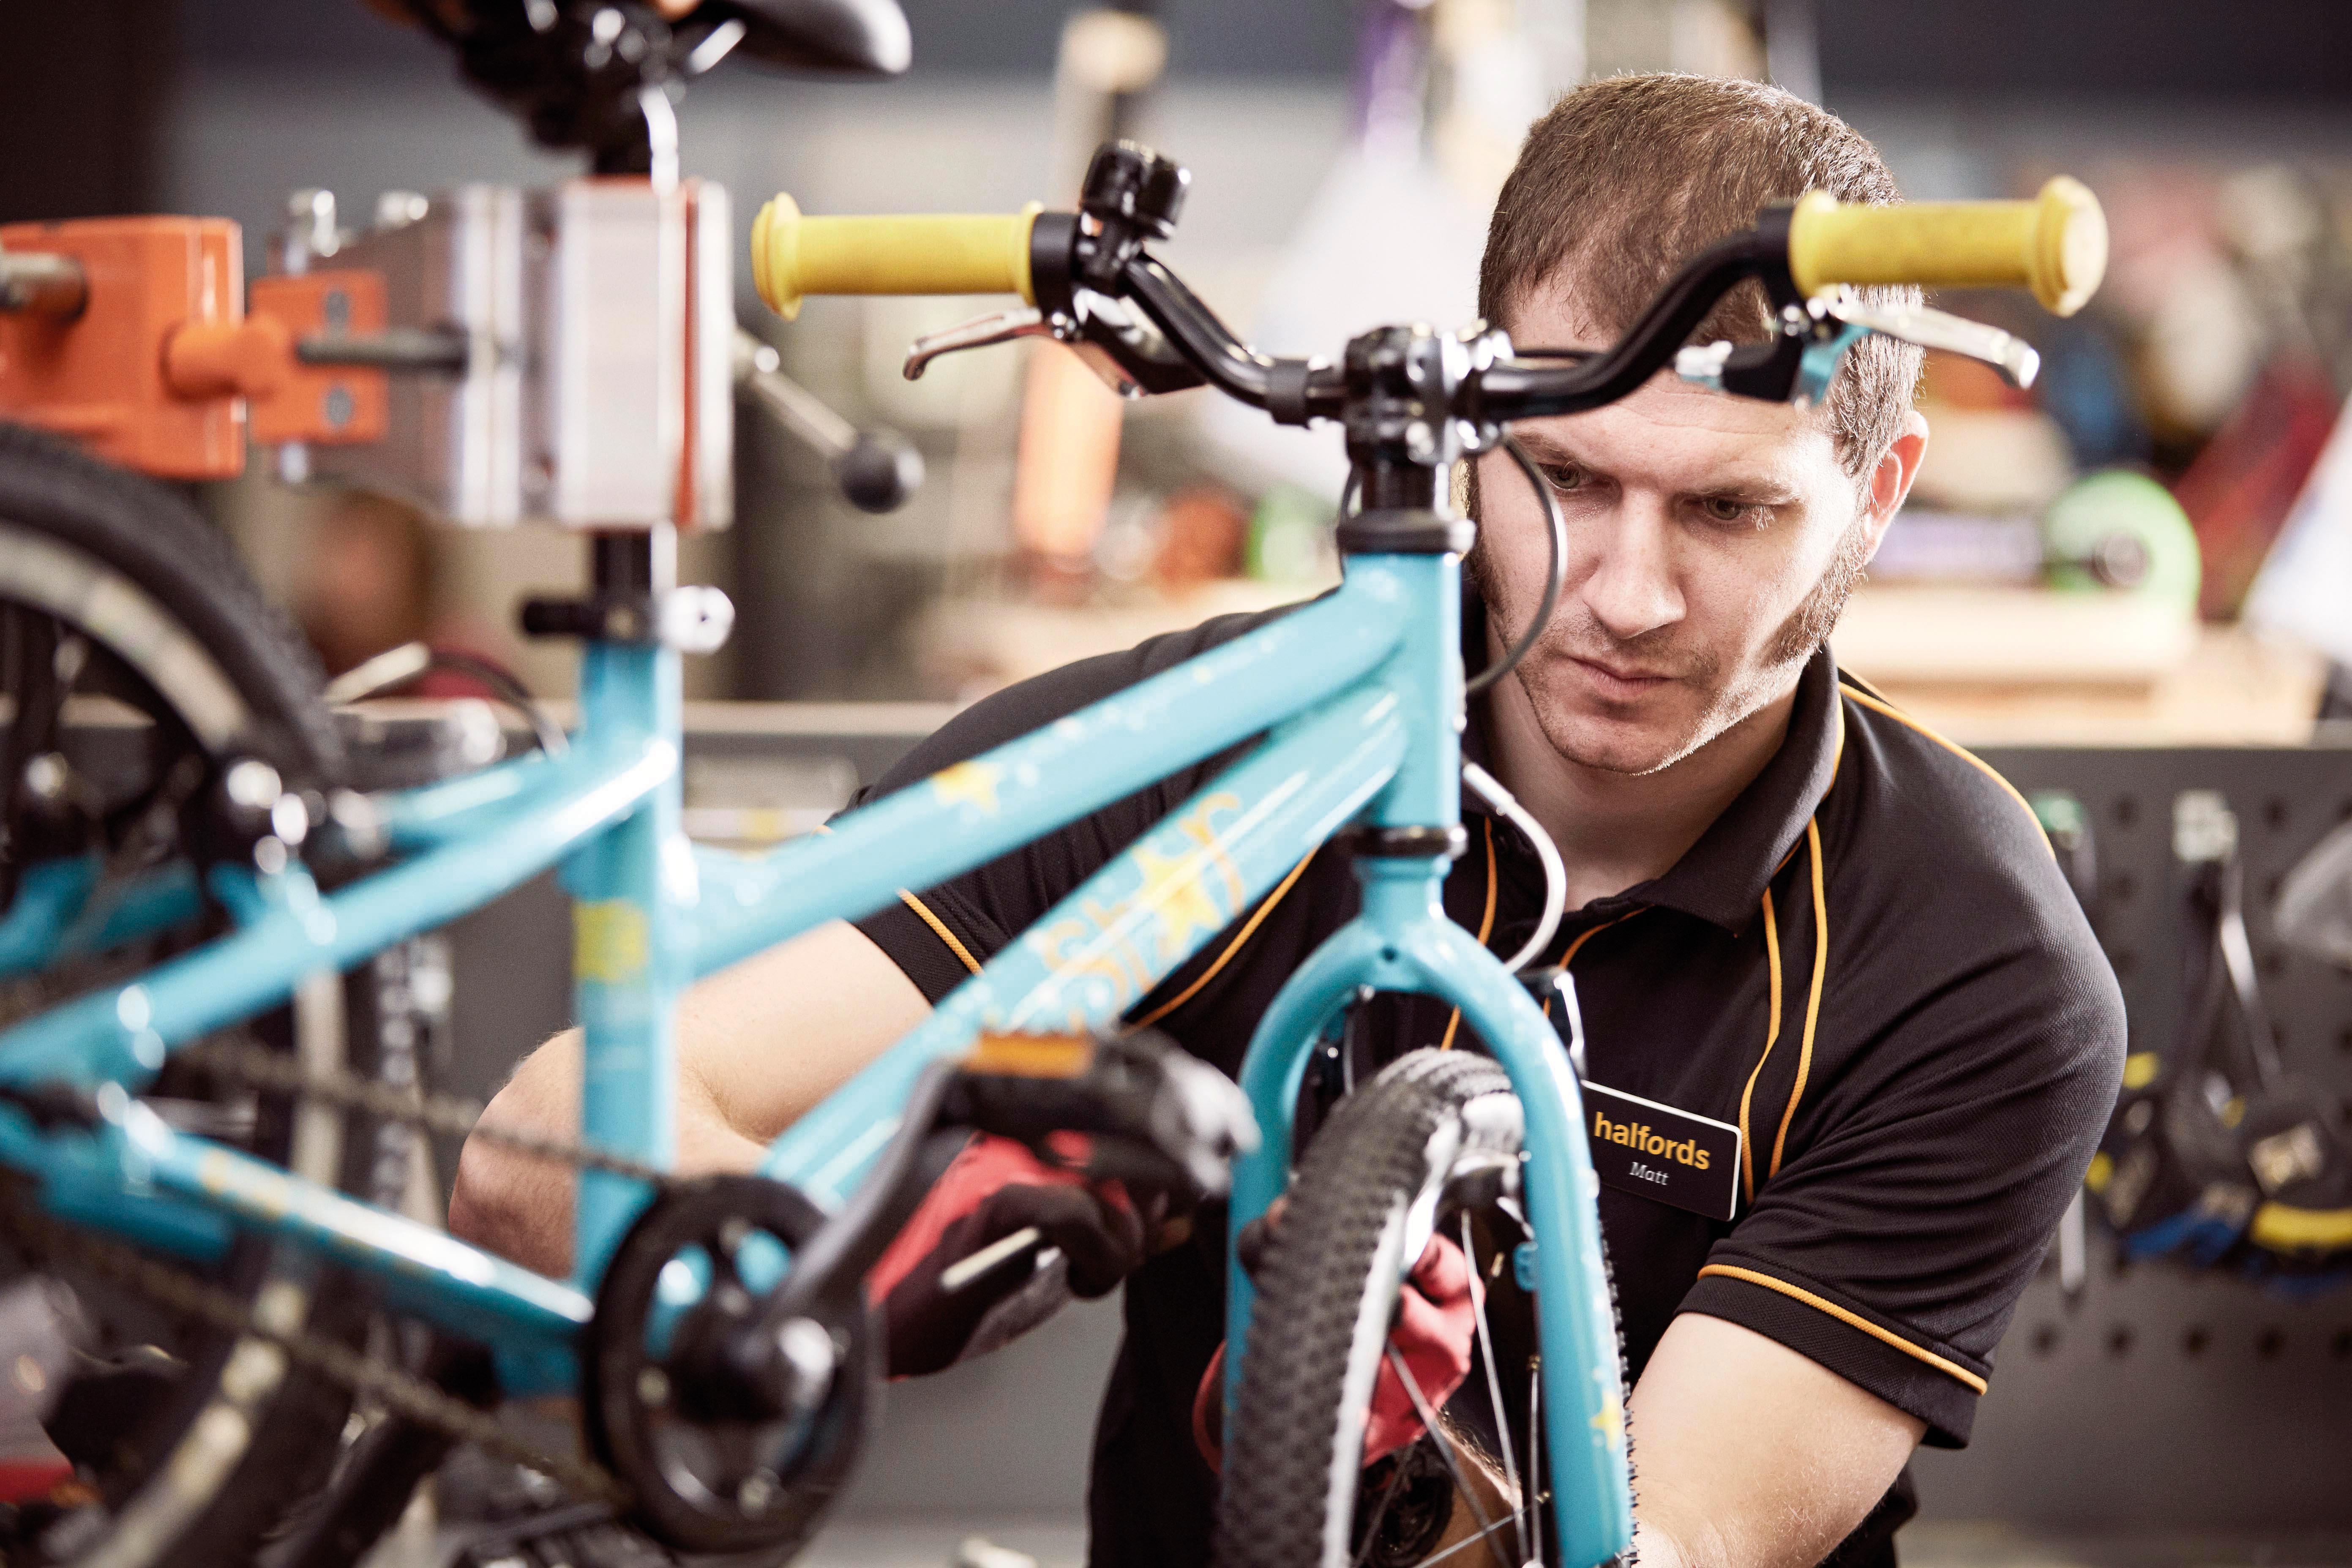 bicycle puncture repair kit halfords